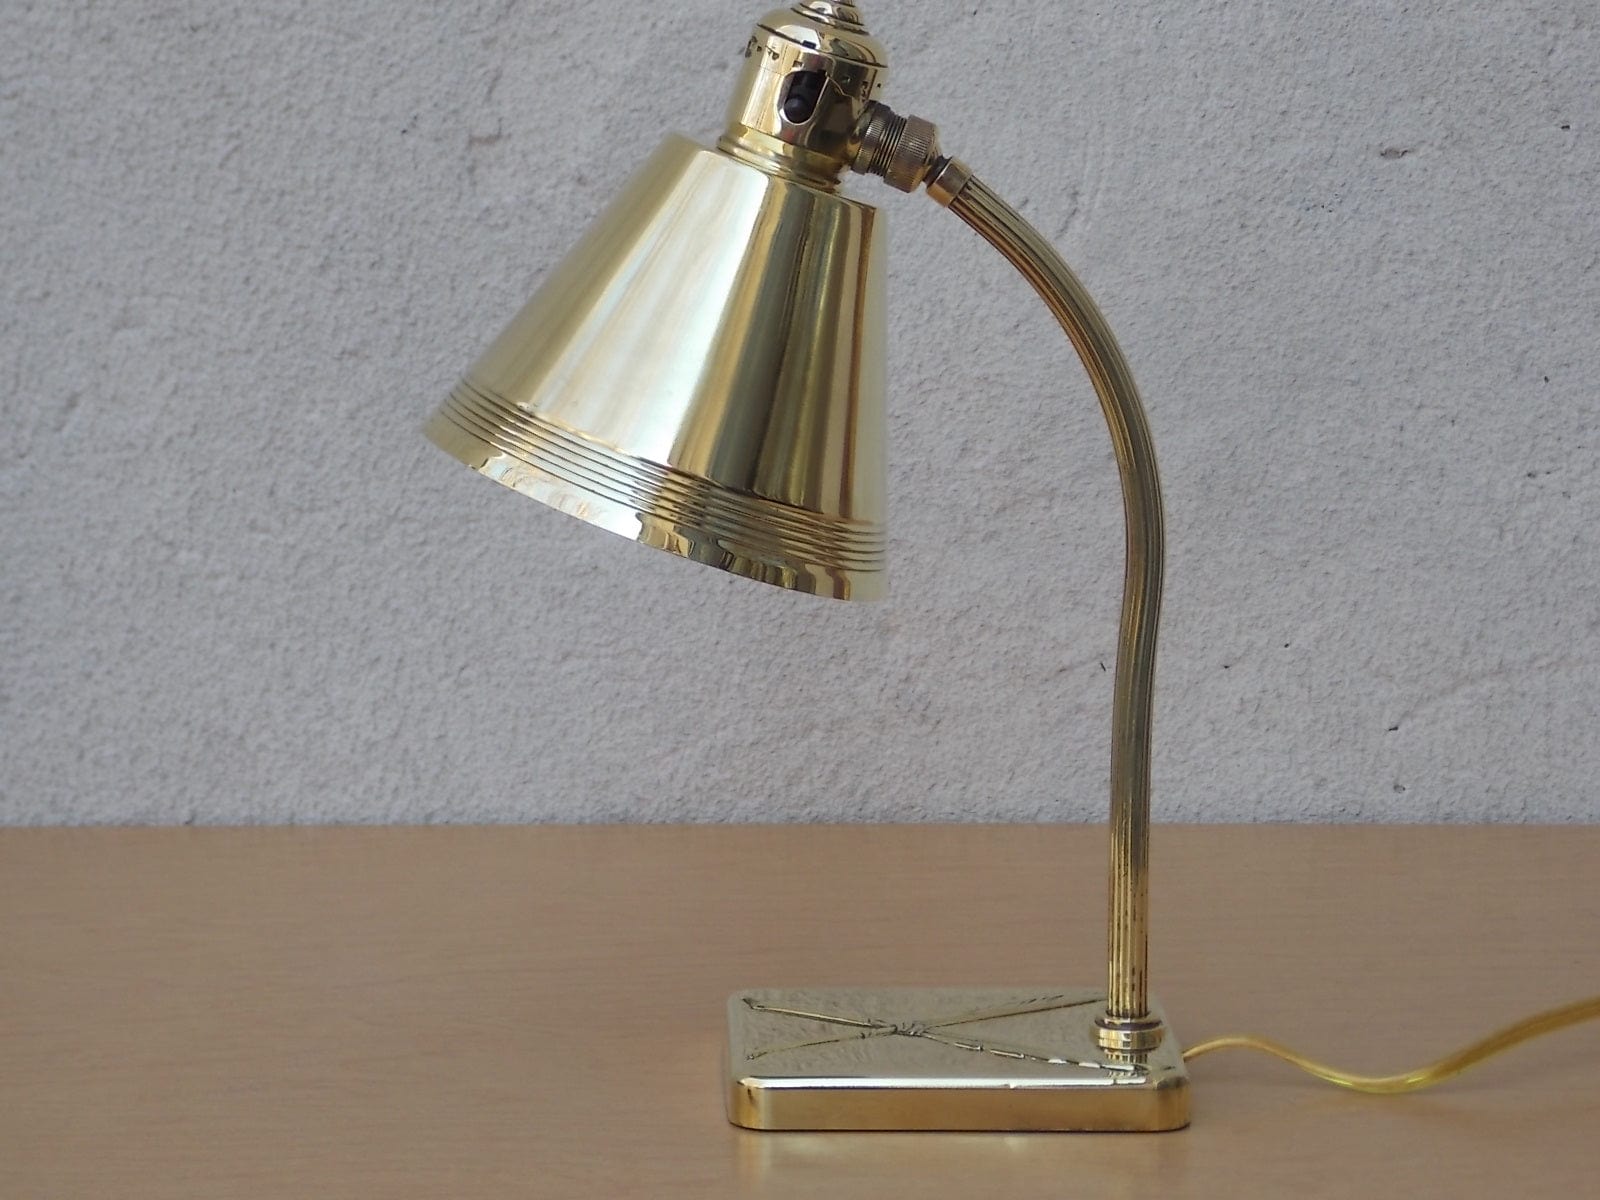 I Like Mike's Mid Century Modern lighting Petite Chase Brass Polished Petite Desk Lamp